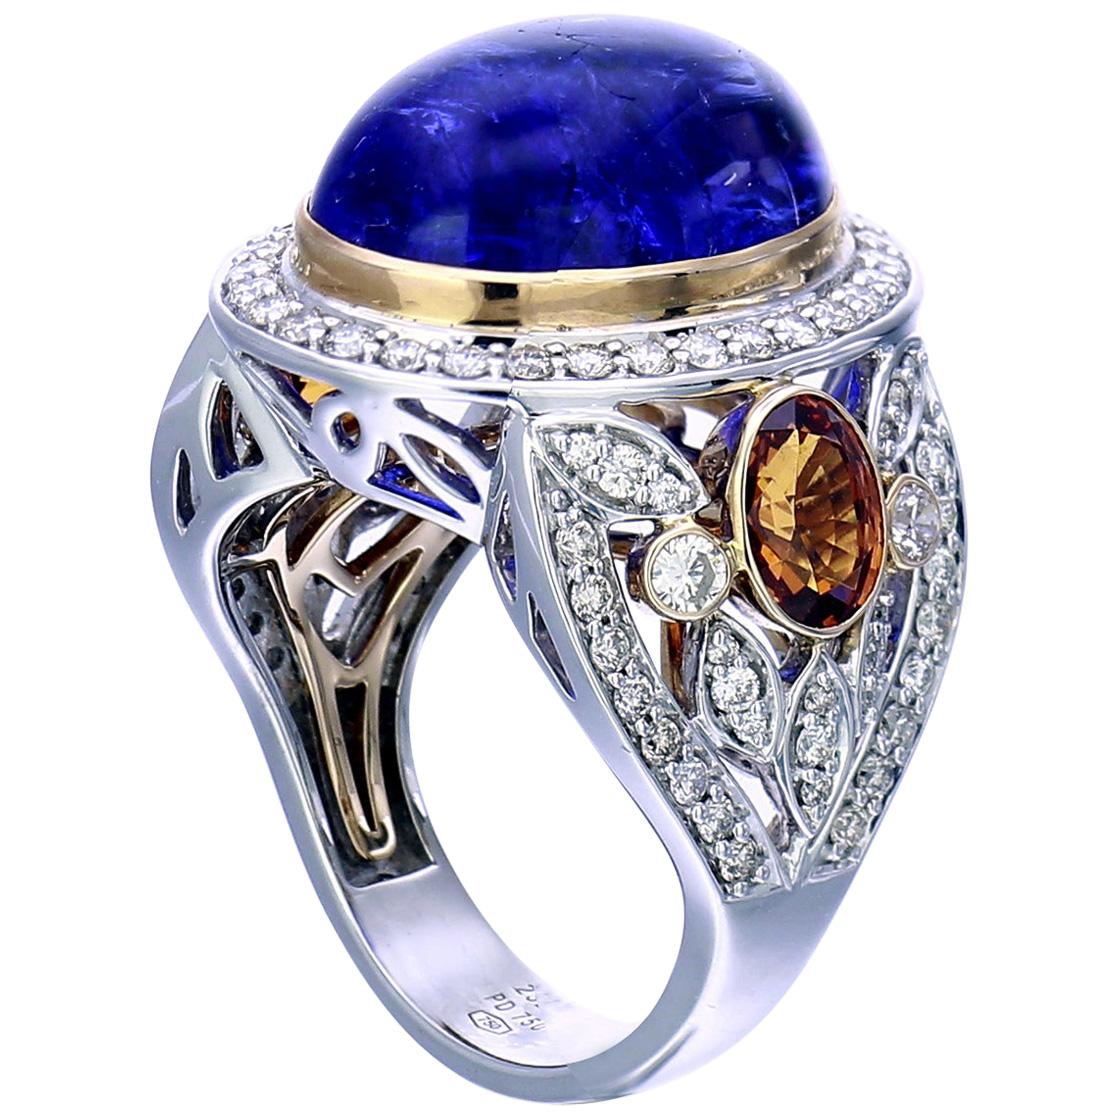 Zorab Creation, Bluebird 15 Carat Tanzanite, Diamond and Spessartite Garnet Ring